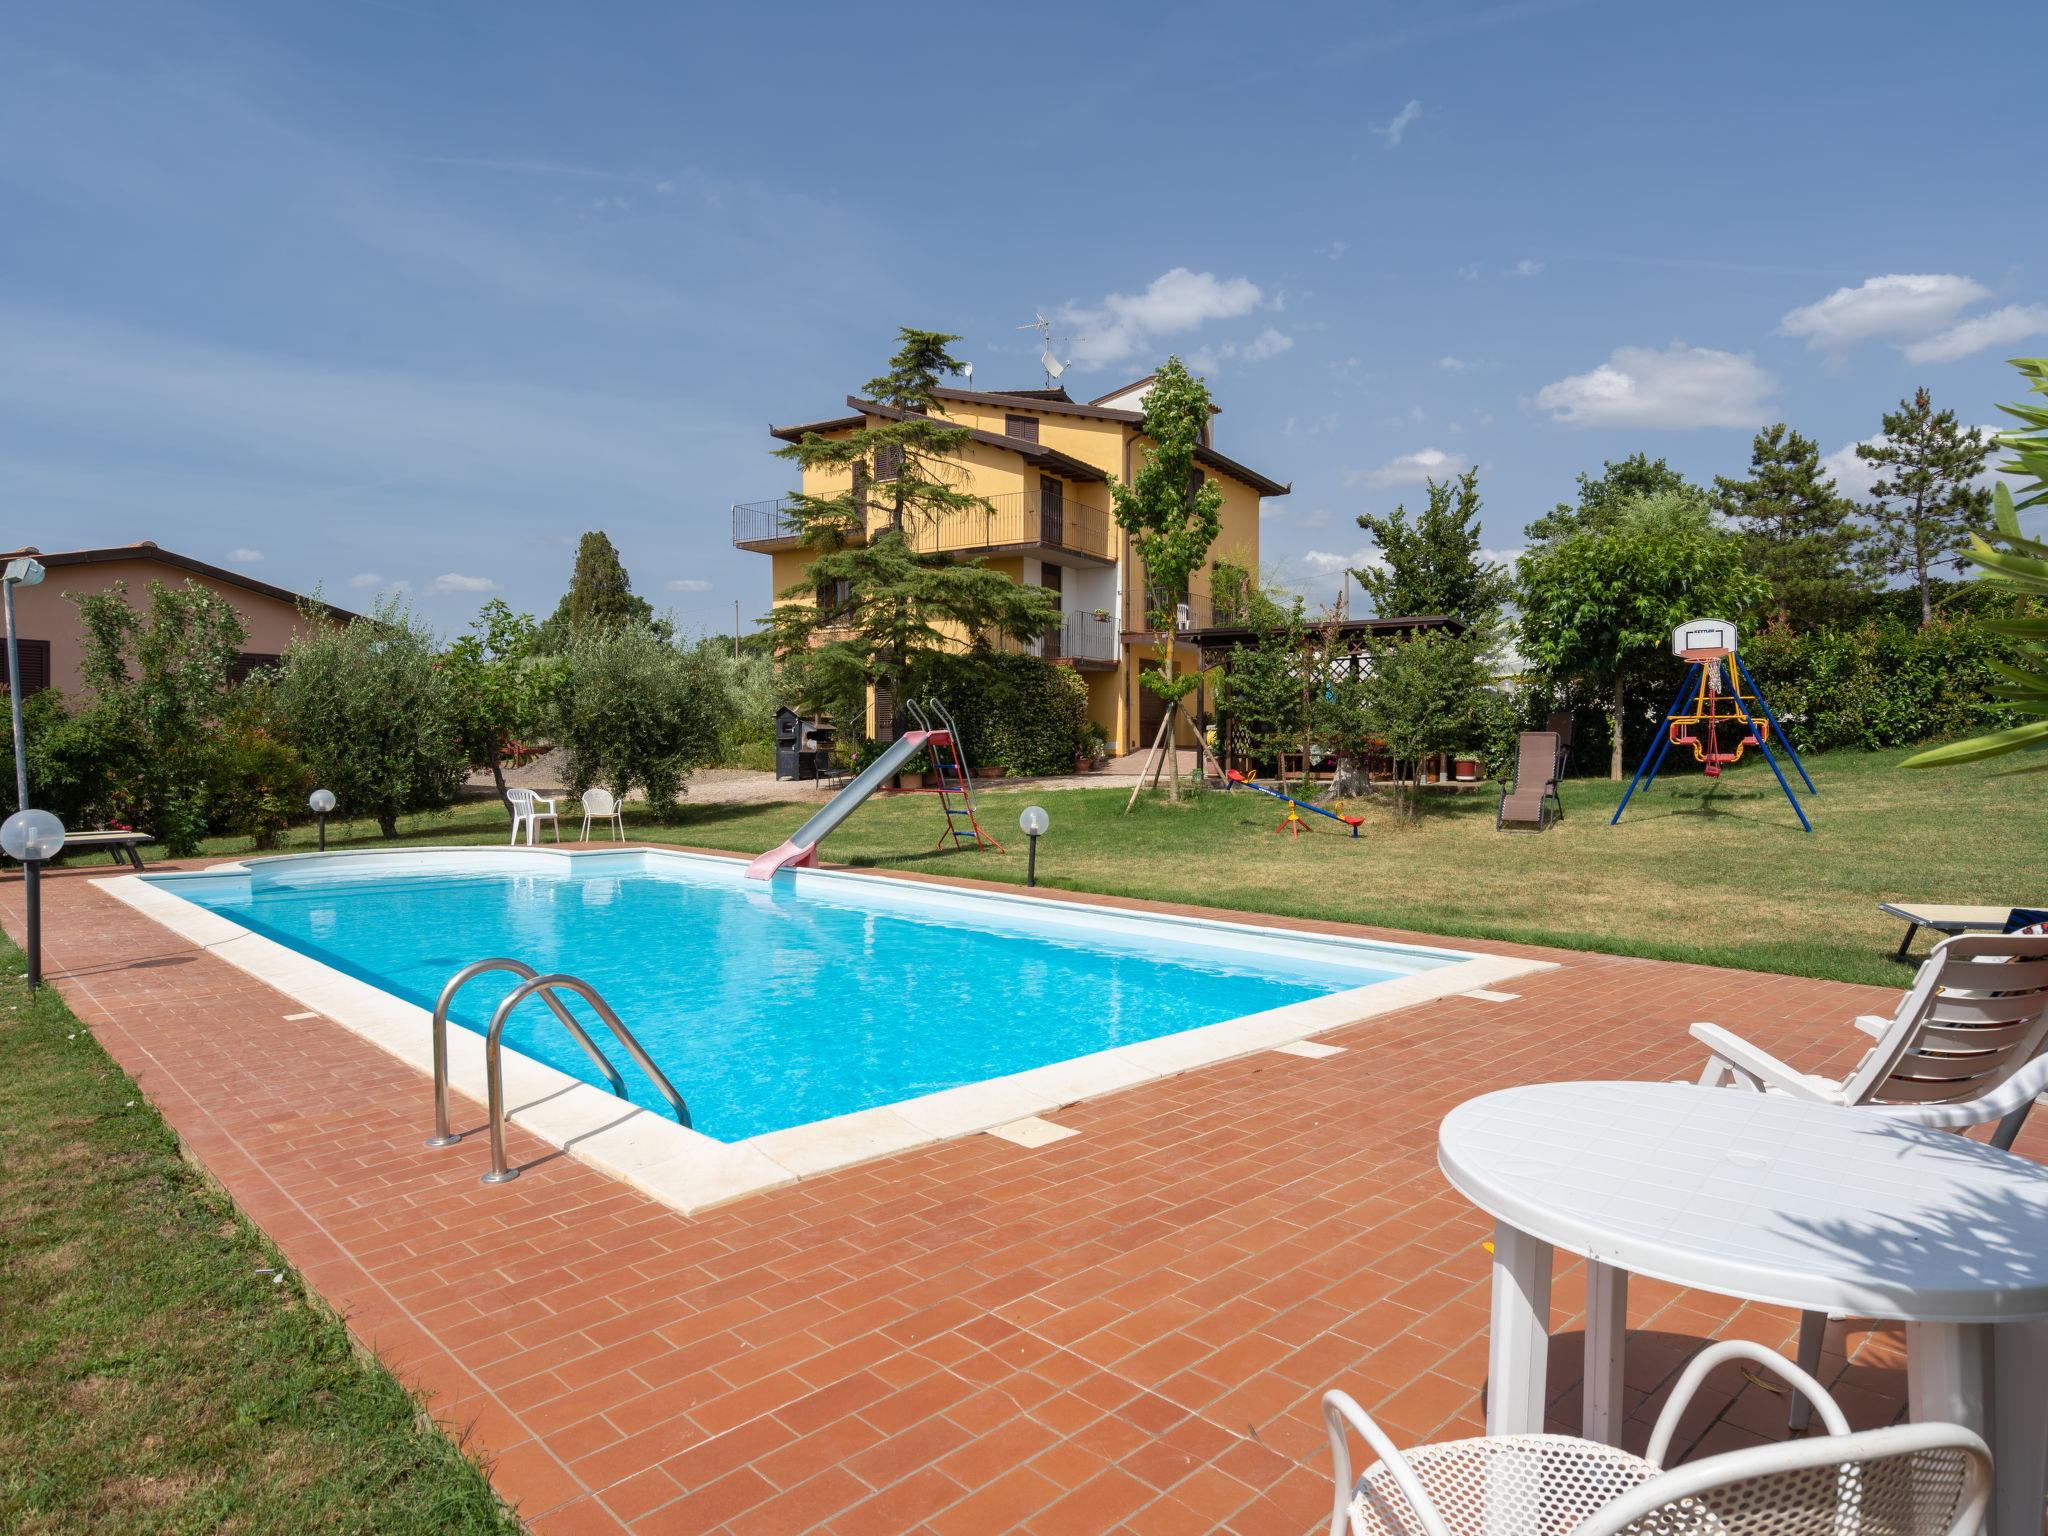 Photo 1 - 5 bedroom House in Foiano della Chiana with private pool and garden